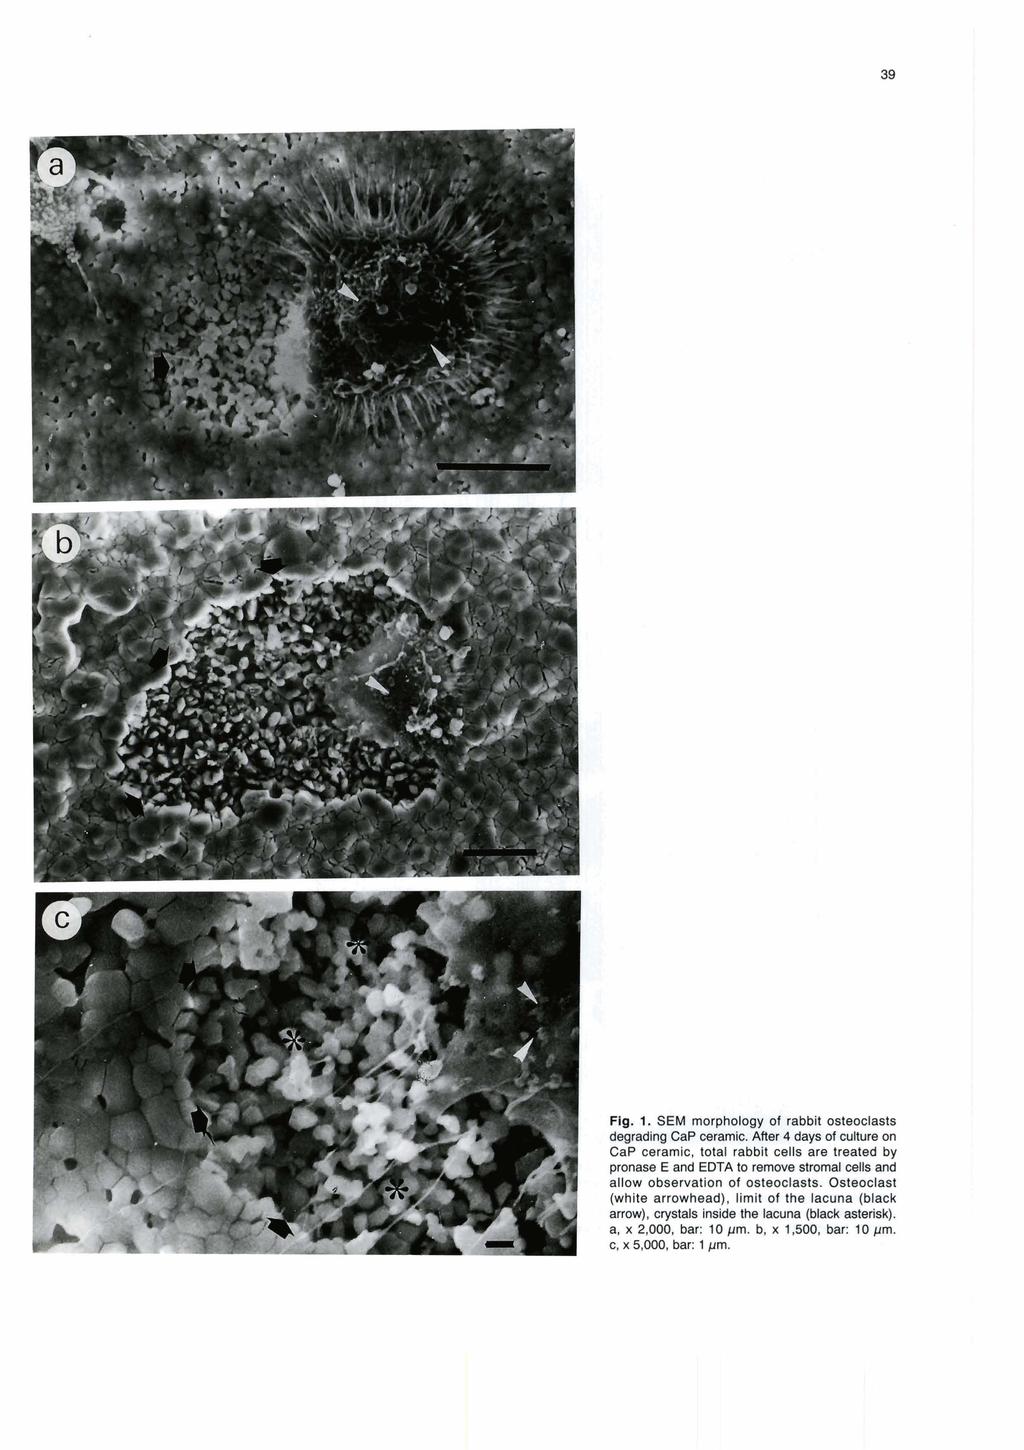 Fig. 1. SEM rnorphology of rabbit osteoclasts degrading Cap ceramic.